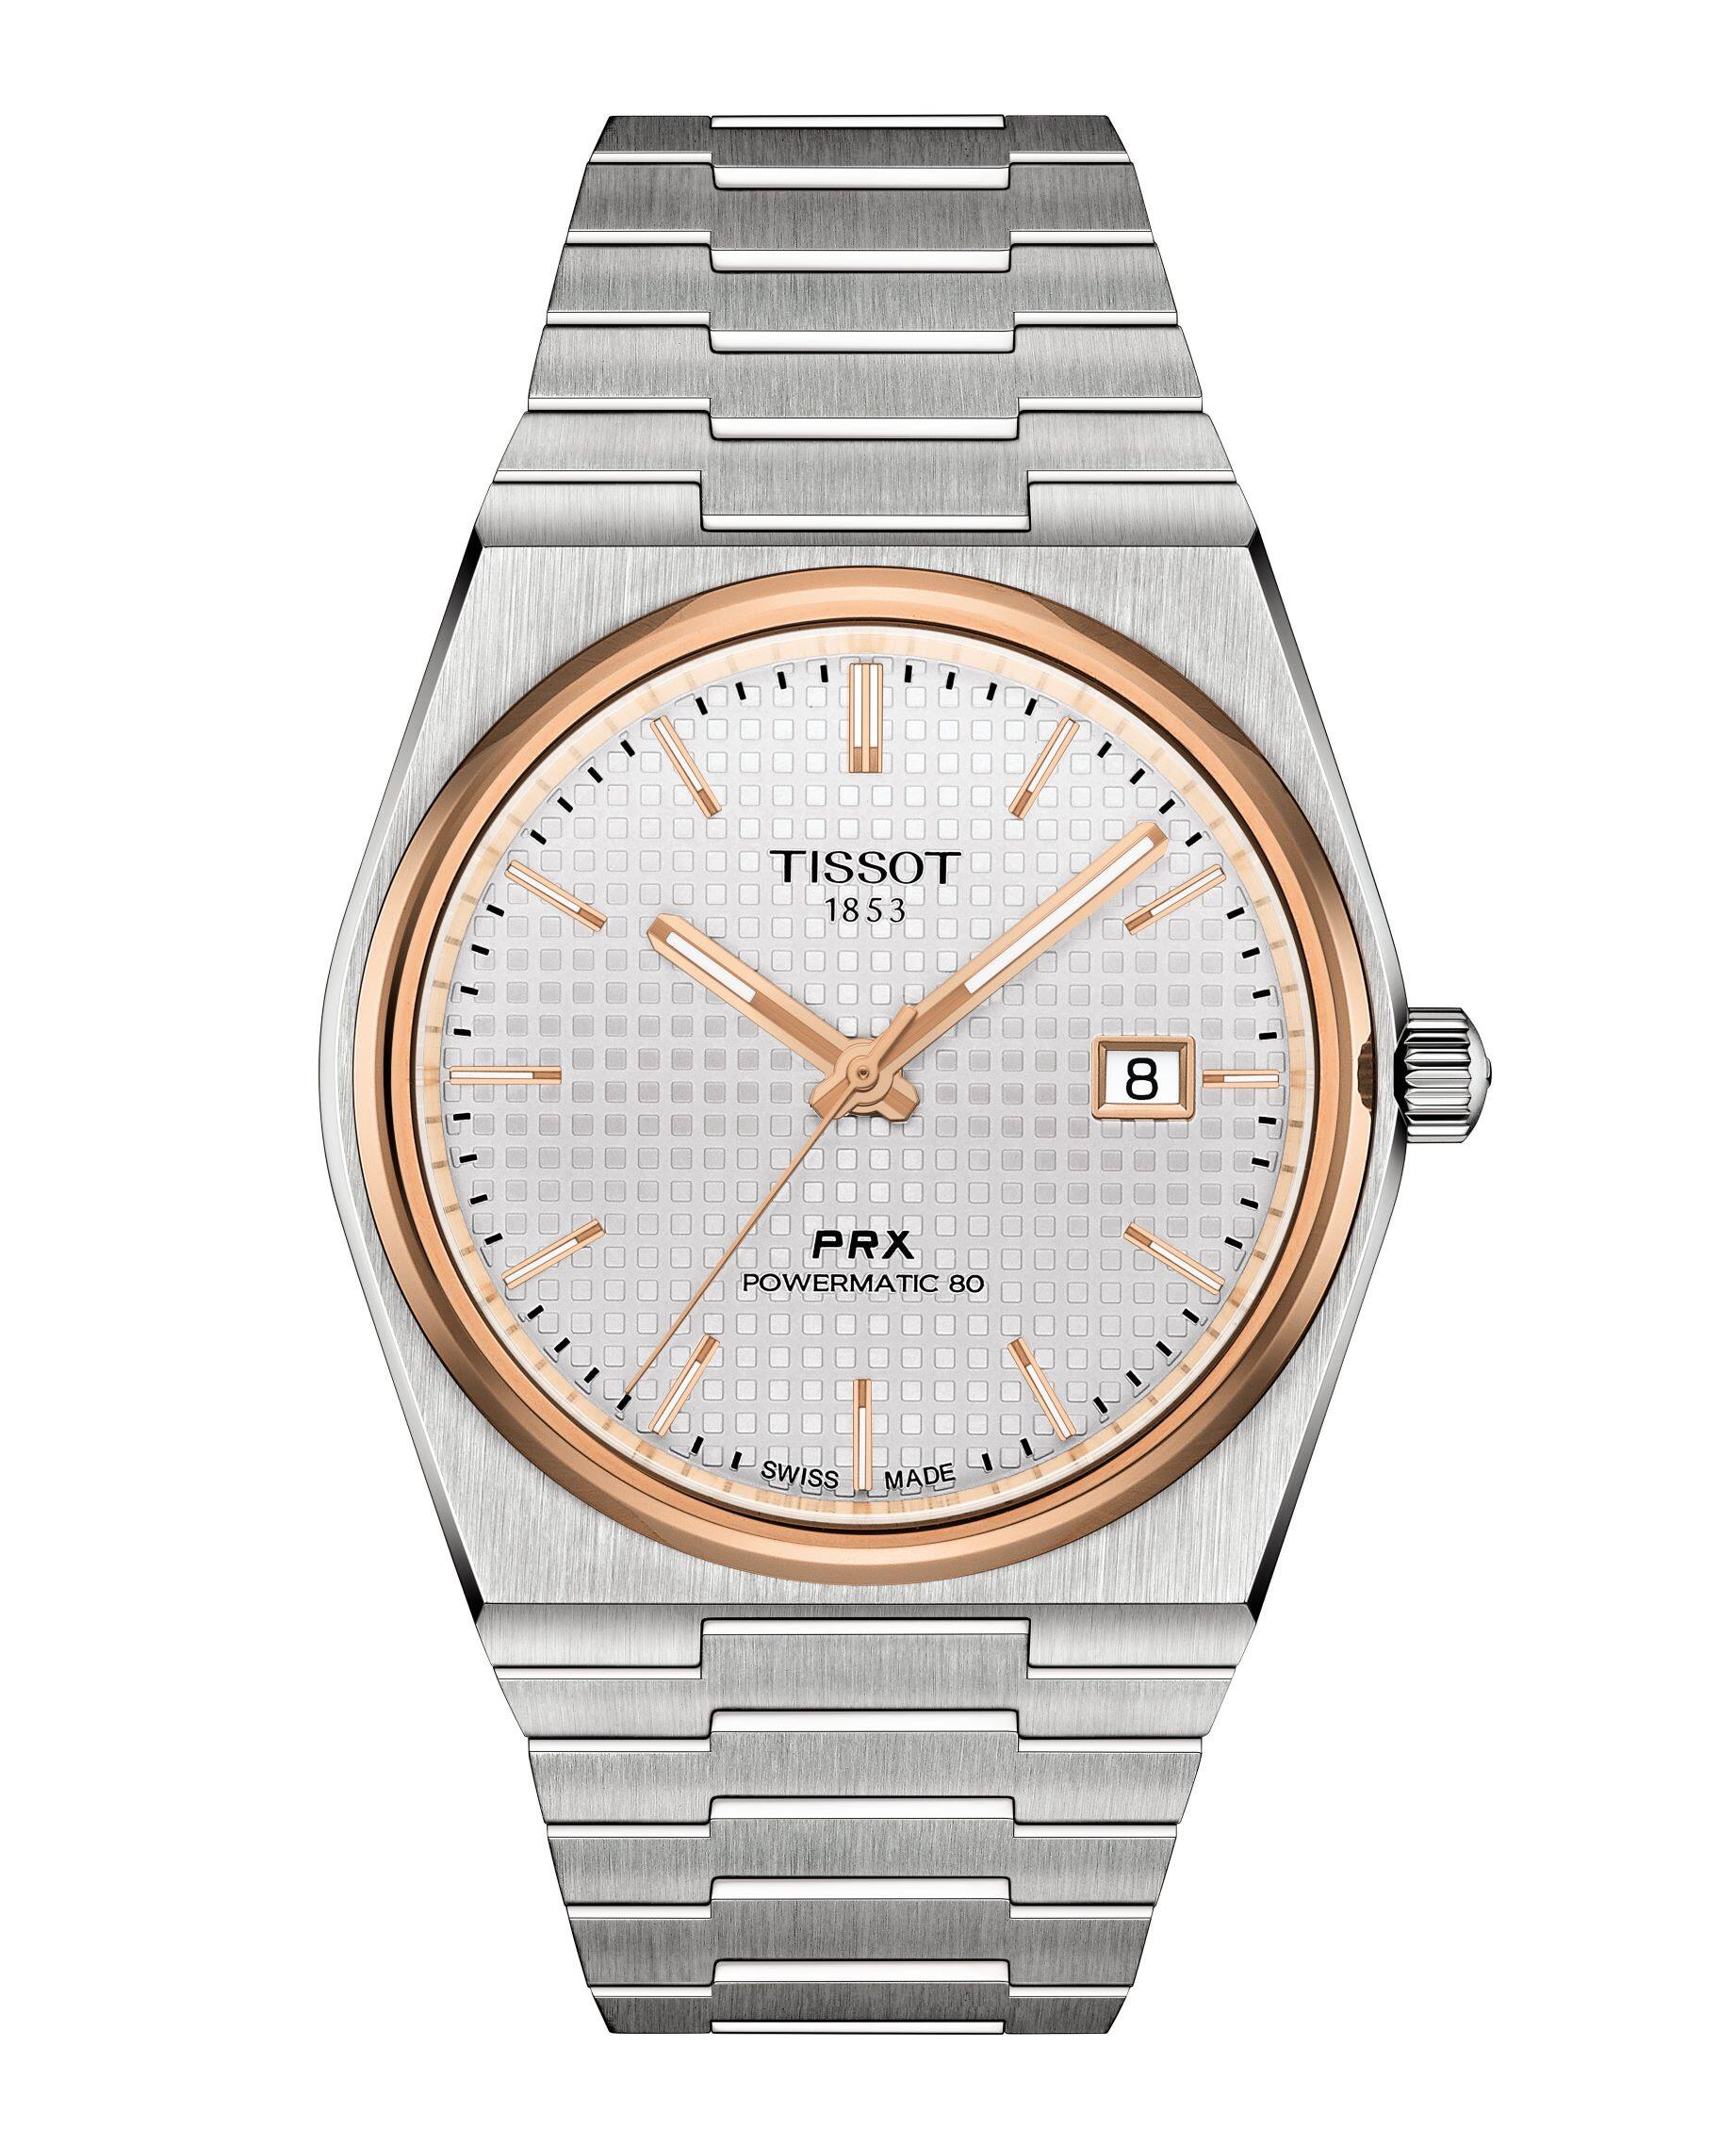 Tissot PRX Powermatic 80 ทิสโซต์ พีอาร์เอ็กซ์ พาวเวอร์เมติค80 T1374072103100 สีเงิน นาฬิกาผู้ชาย